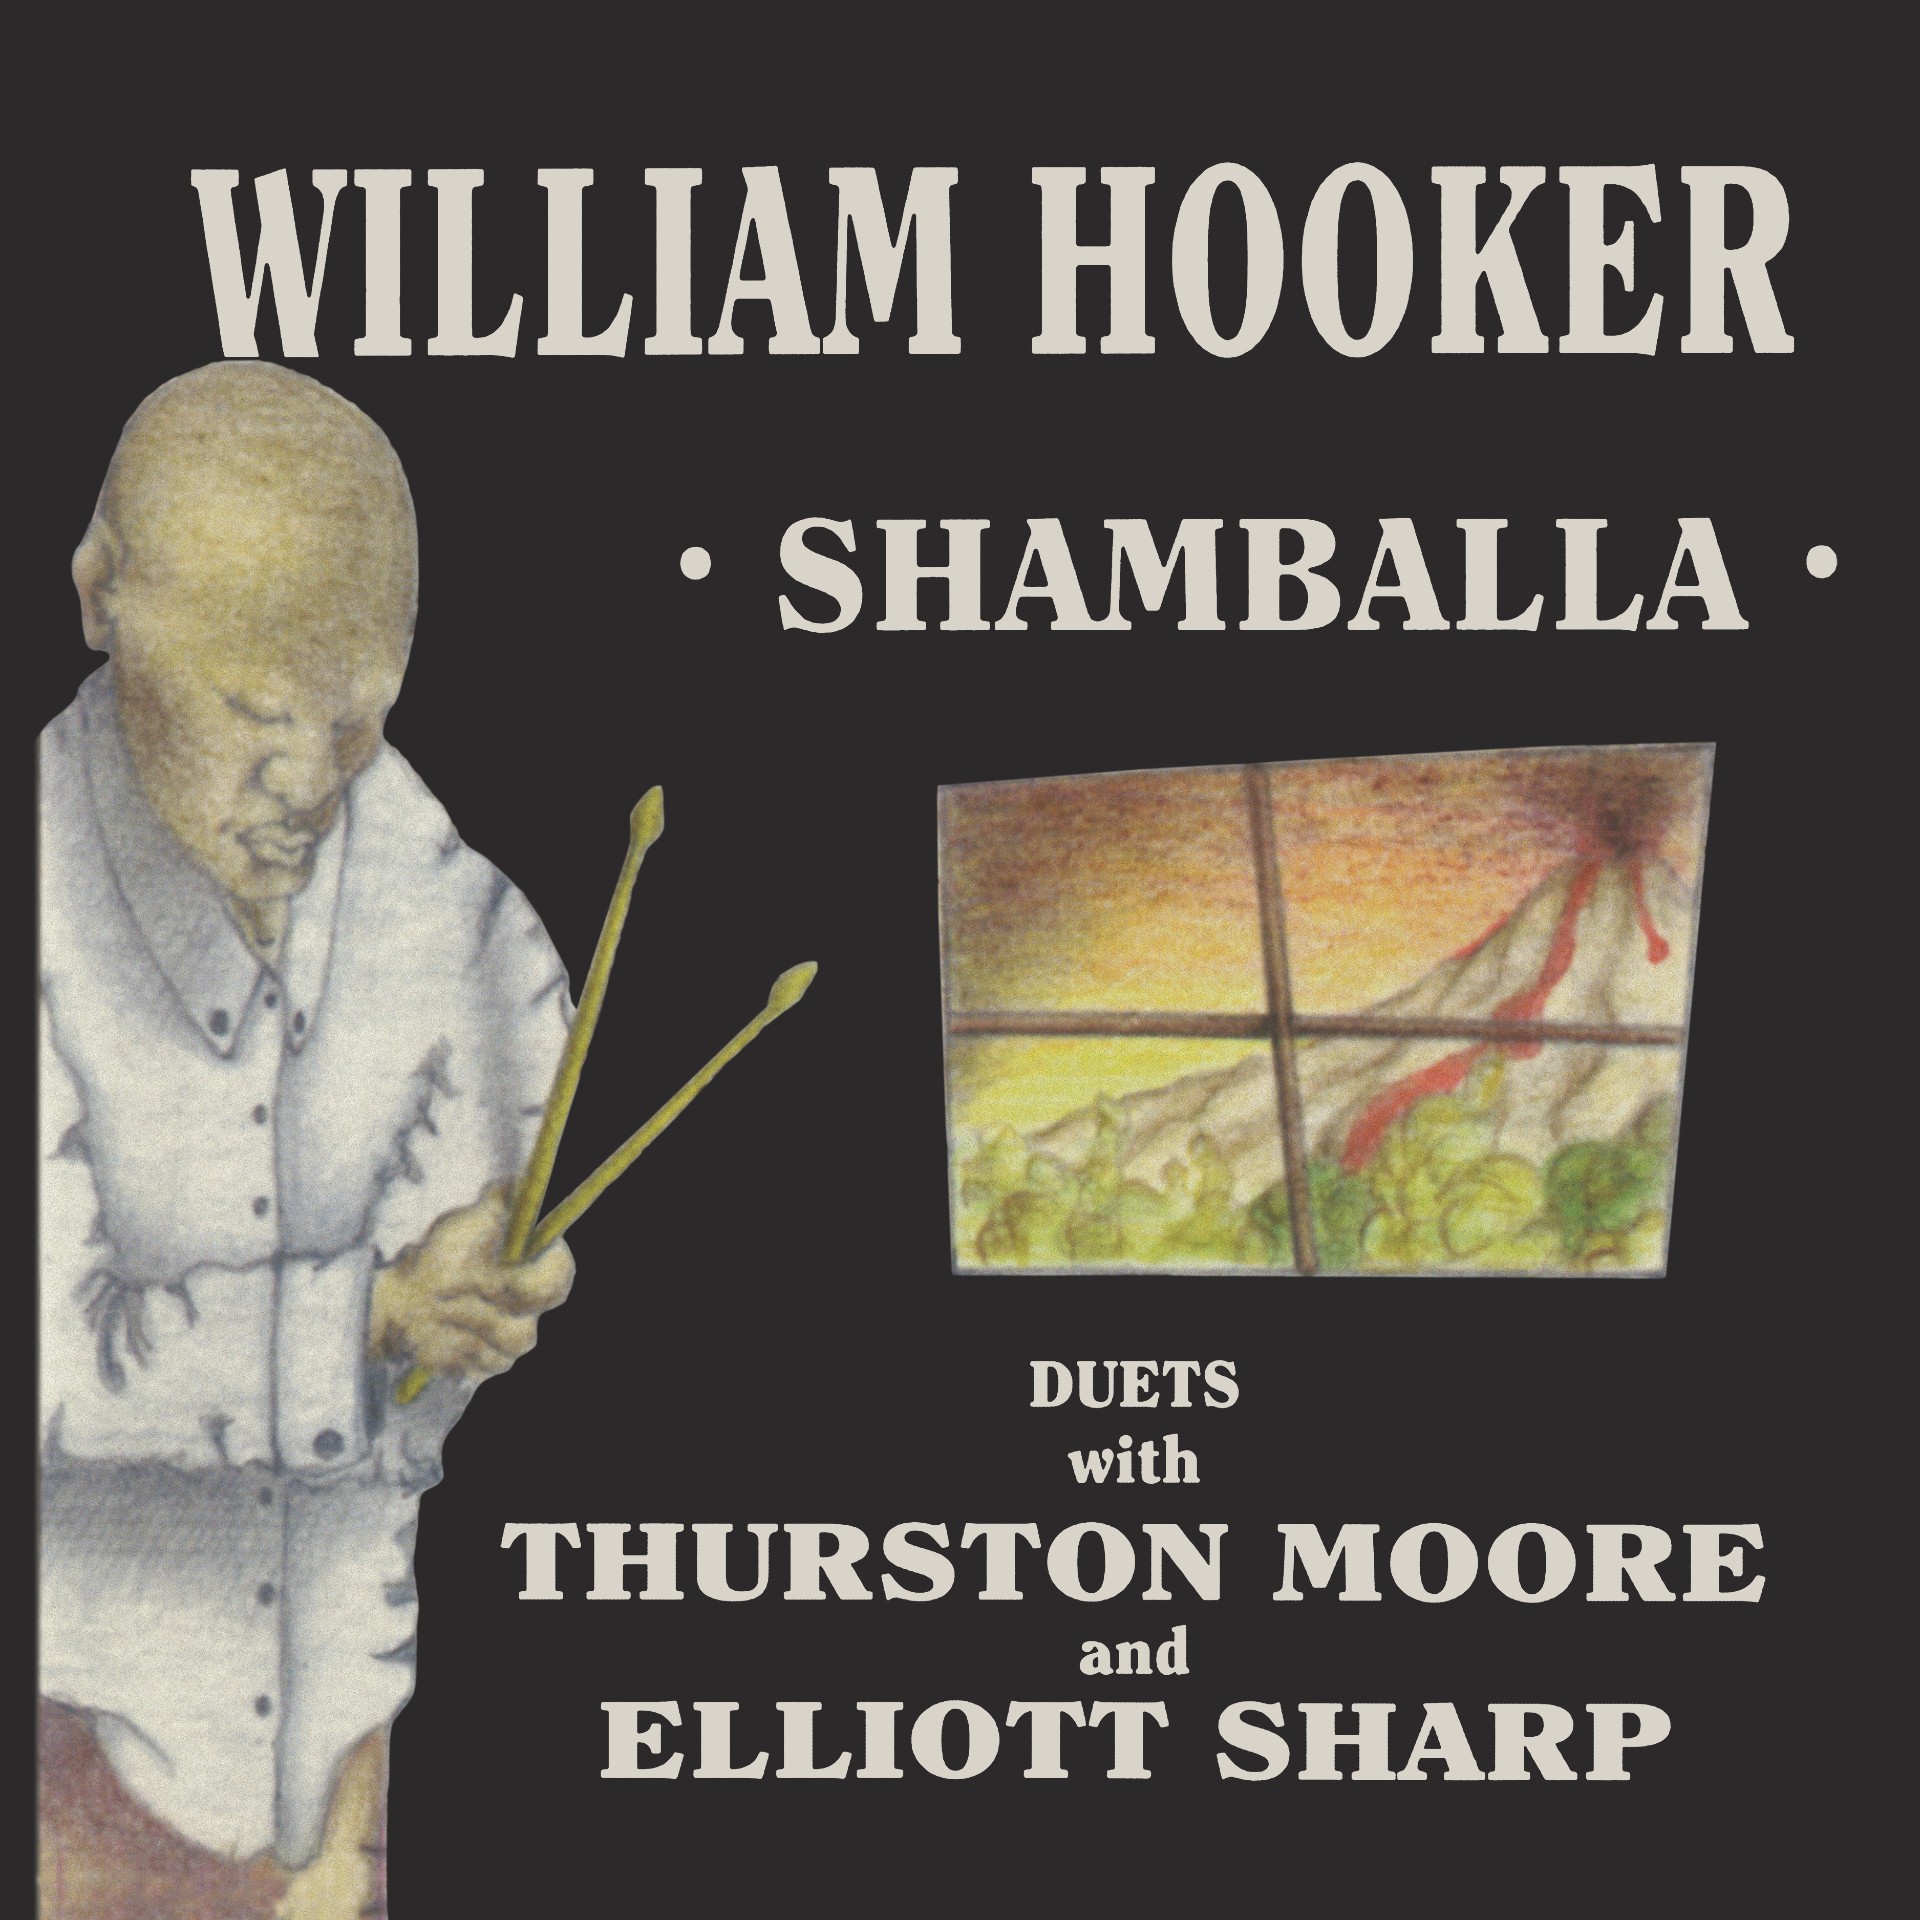 Artwork for the album ‘Shamballa’ by William Hooker